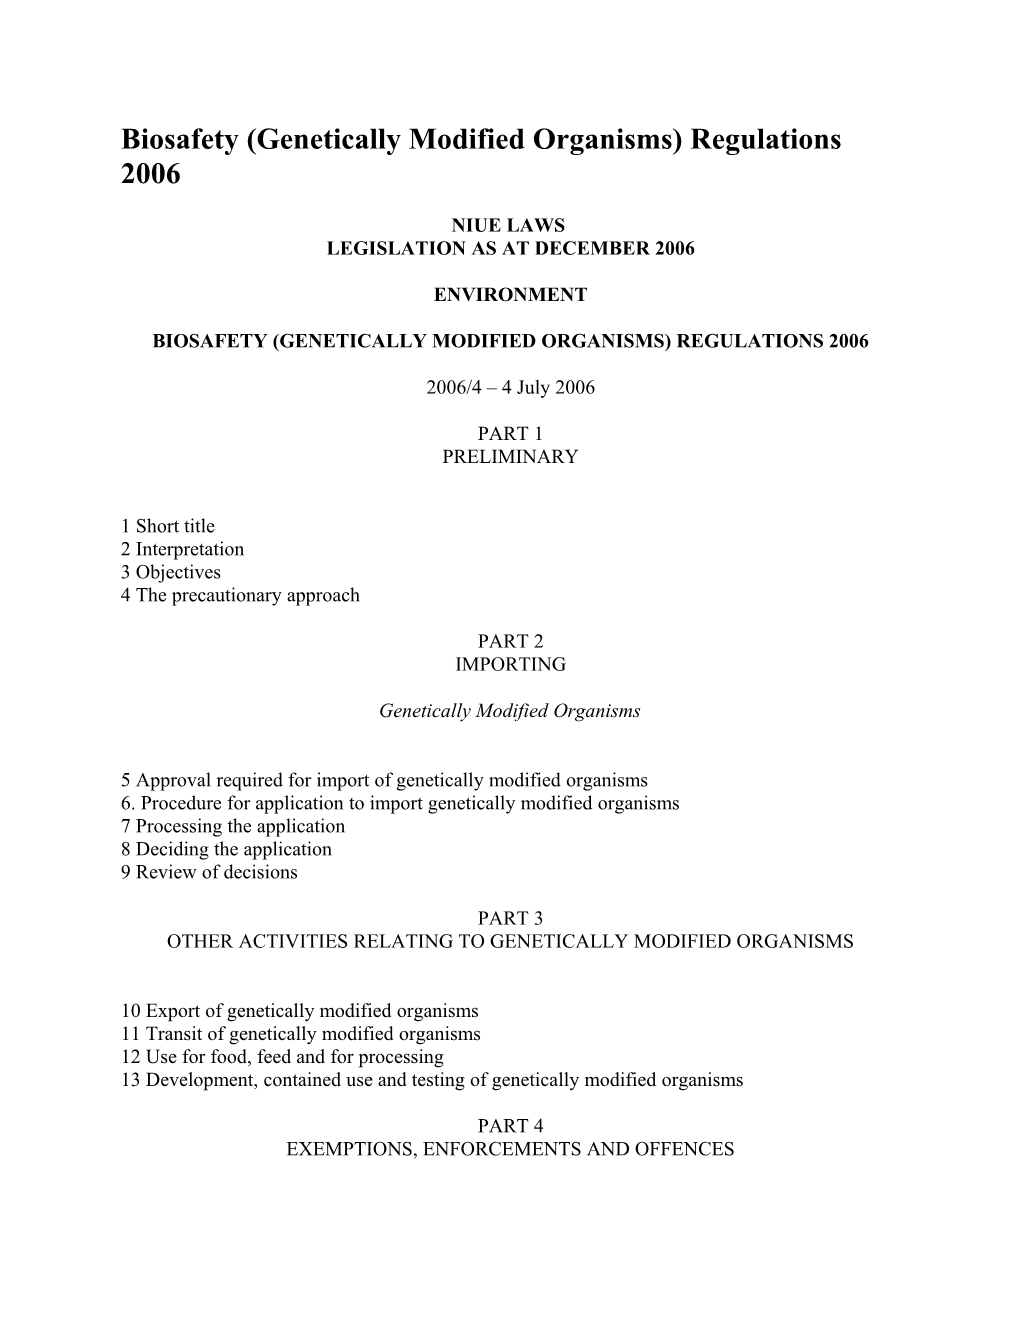 Biosafety (Genetically Modified Organisms) Regulations 2006